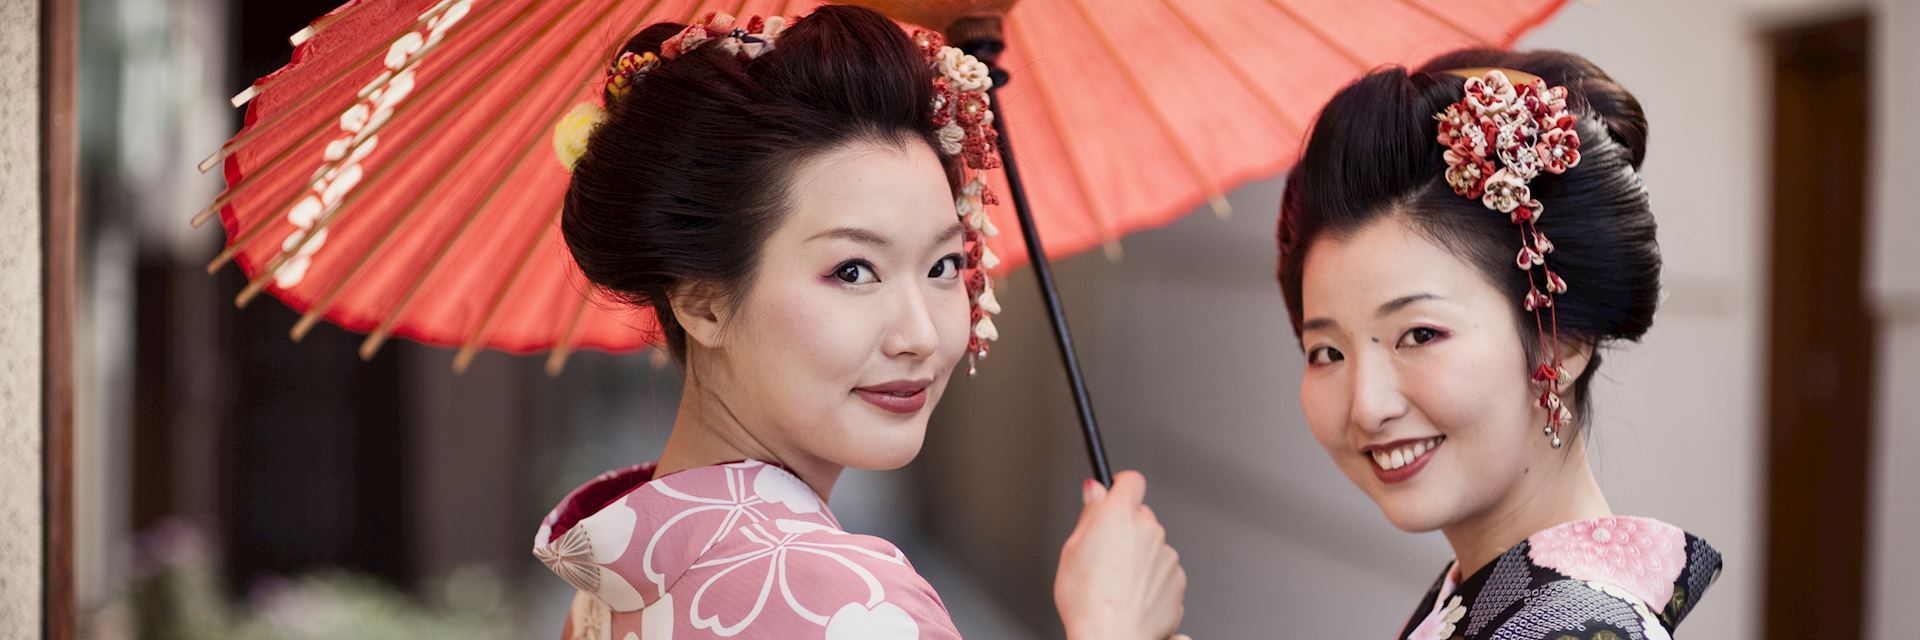 Japanese women wearing traditional kimono's